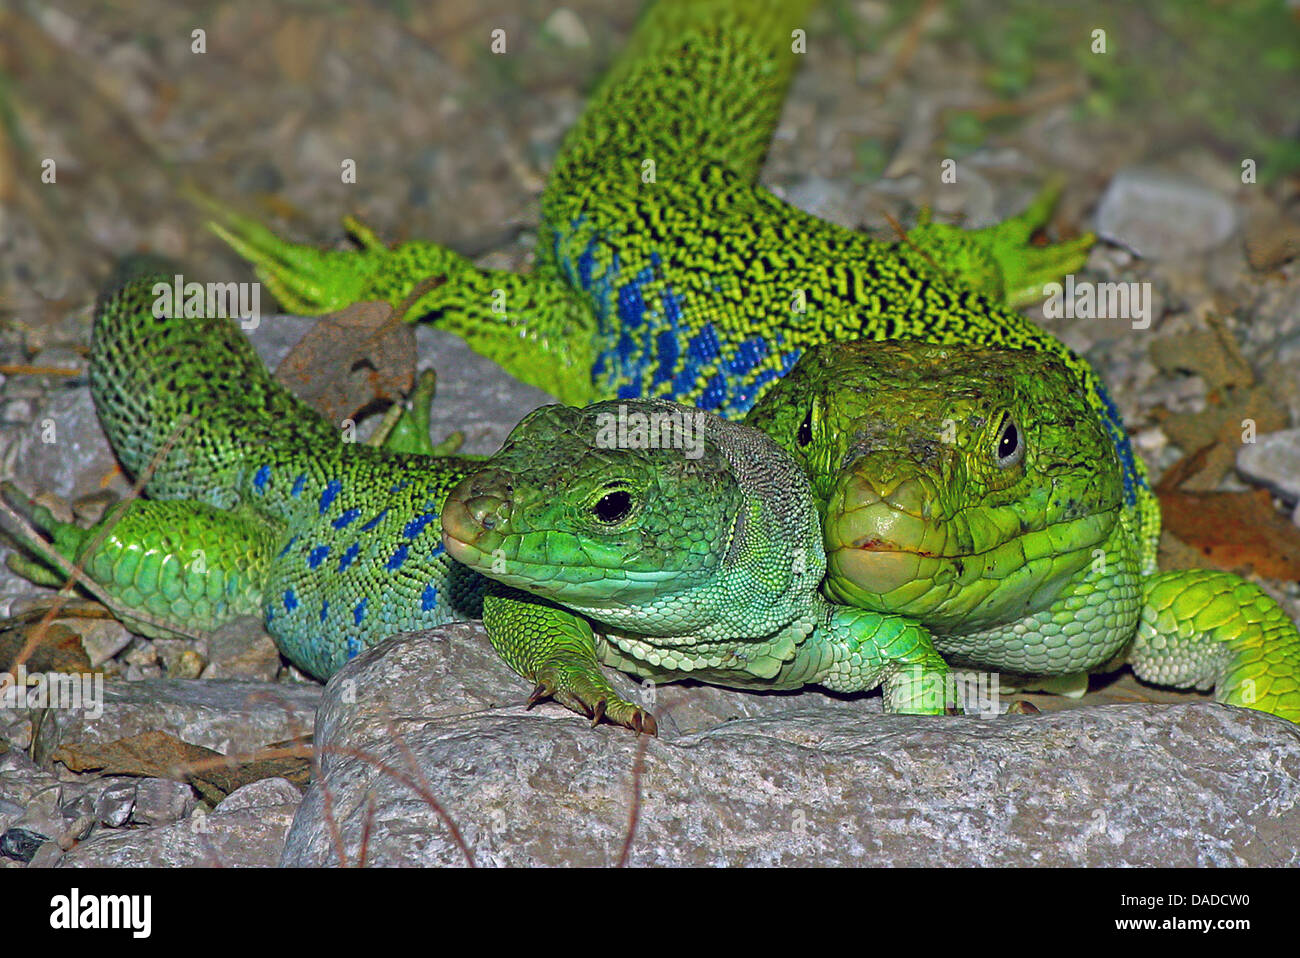 ocellated-lizard-ocellated-green-lizard-eyed-lizard-jewelled-lizard-DADCW0.jpg